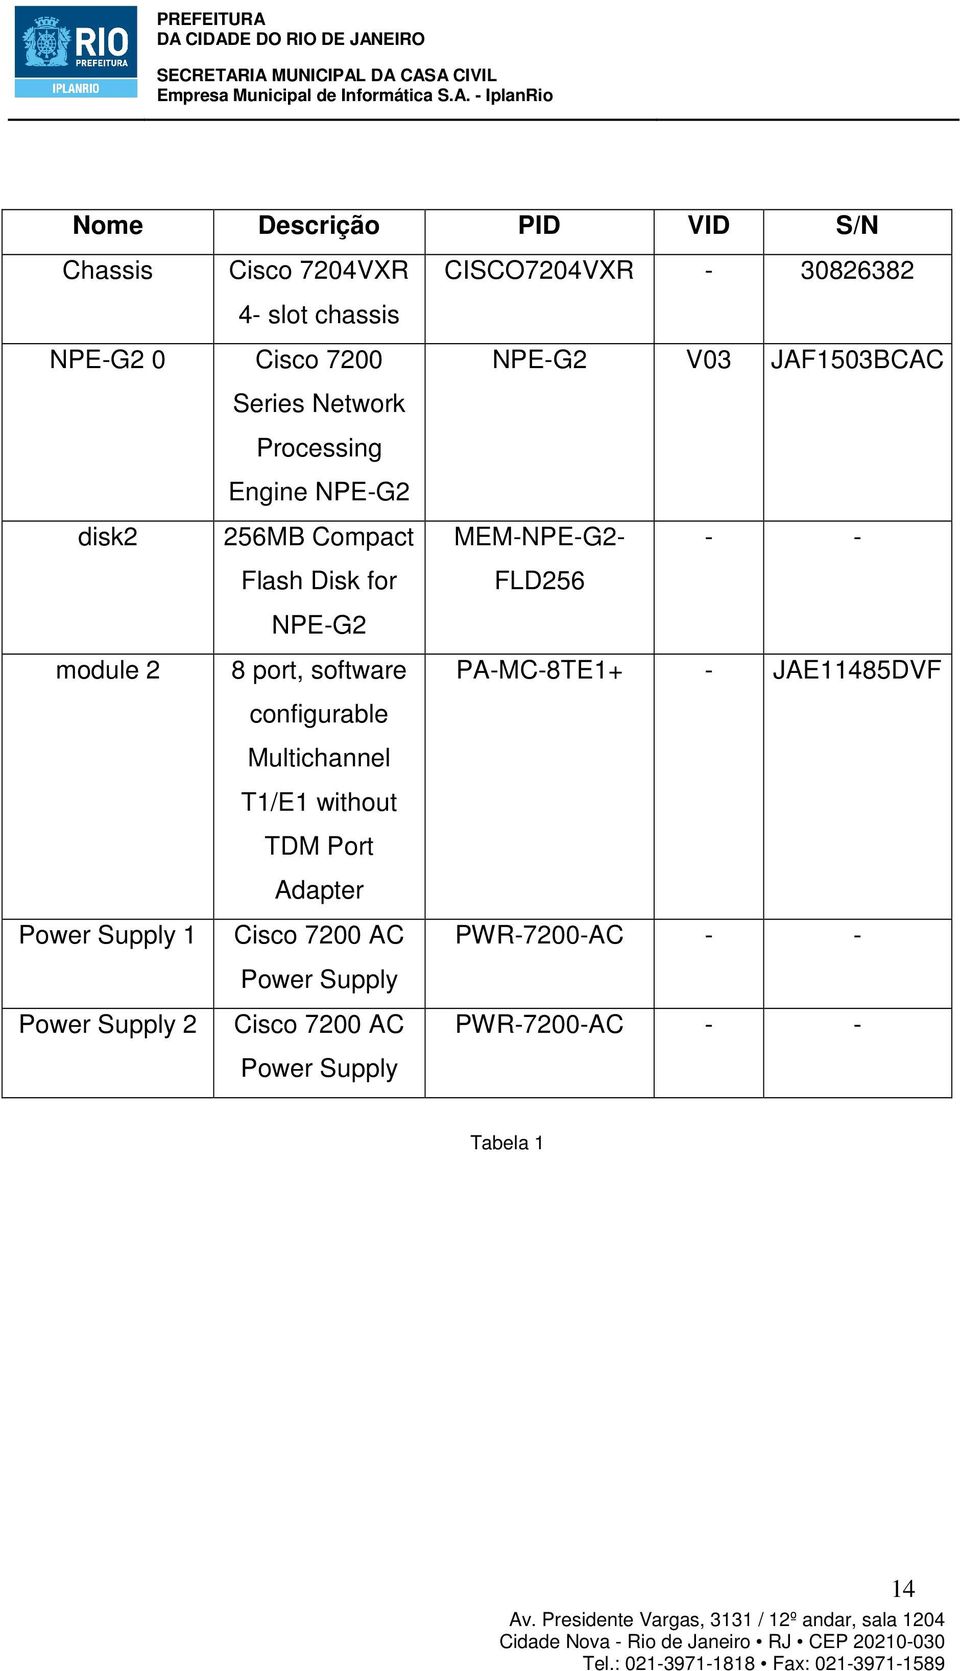 FLD256 module 2 8 port, software PA-MC-8TE1+ - JAE11485DVF configurable Multichannel T1/E1 without TDM Port Adapter